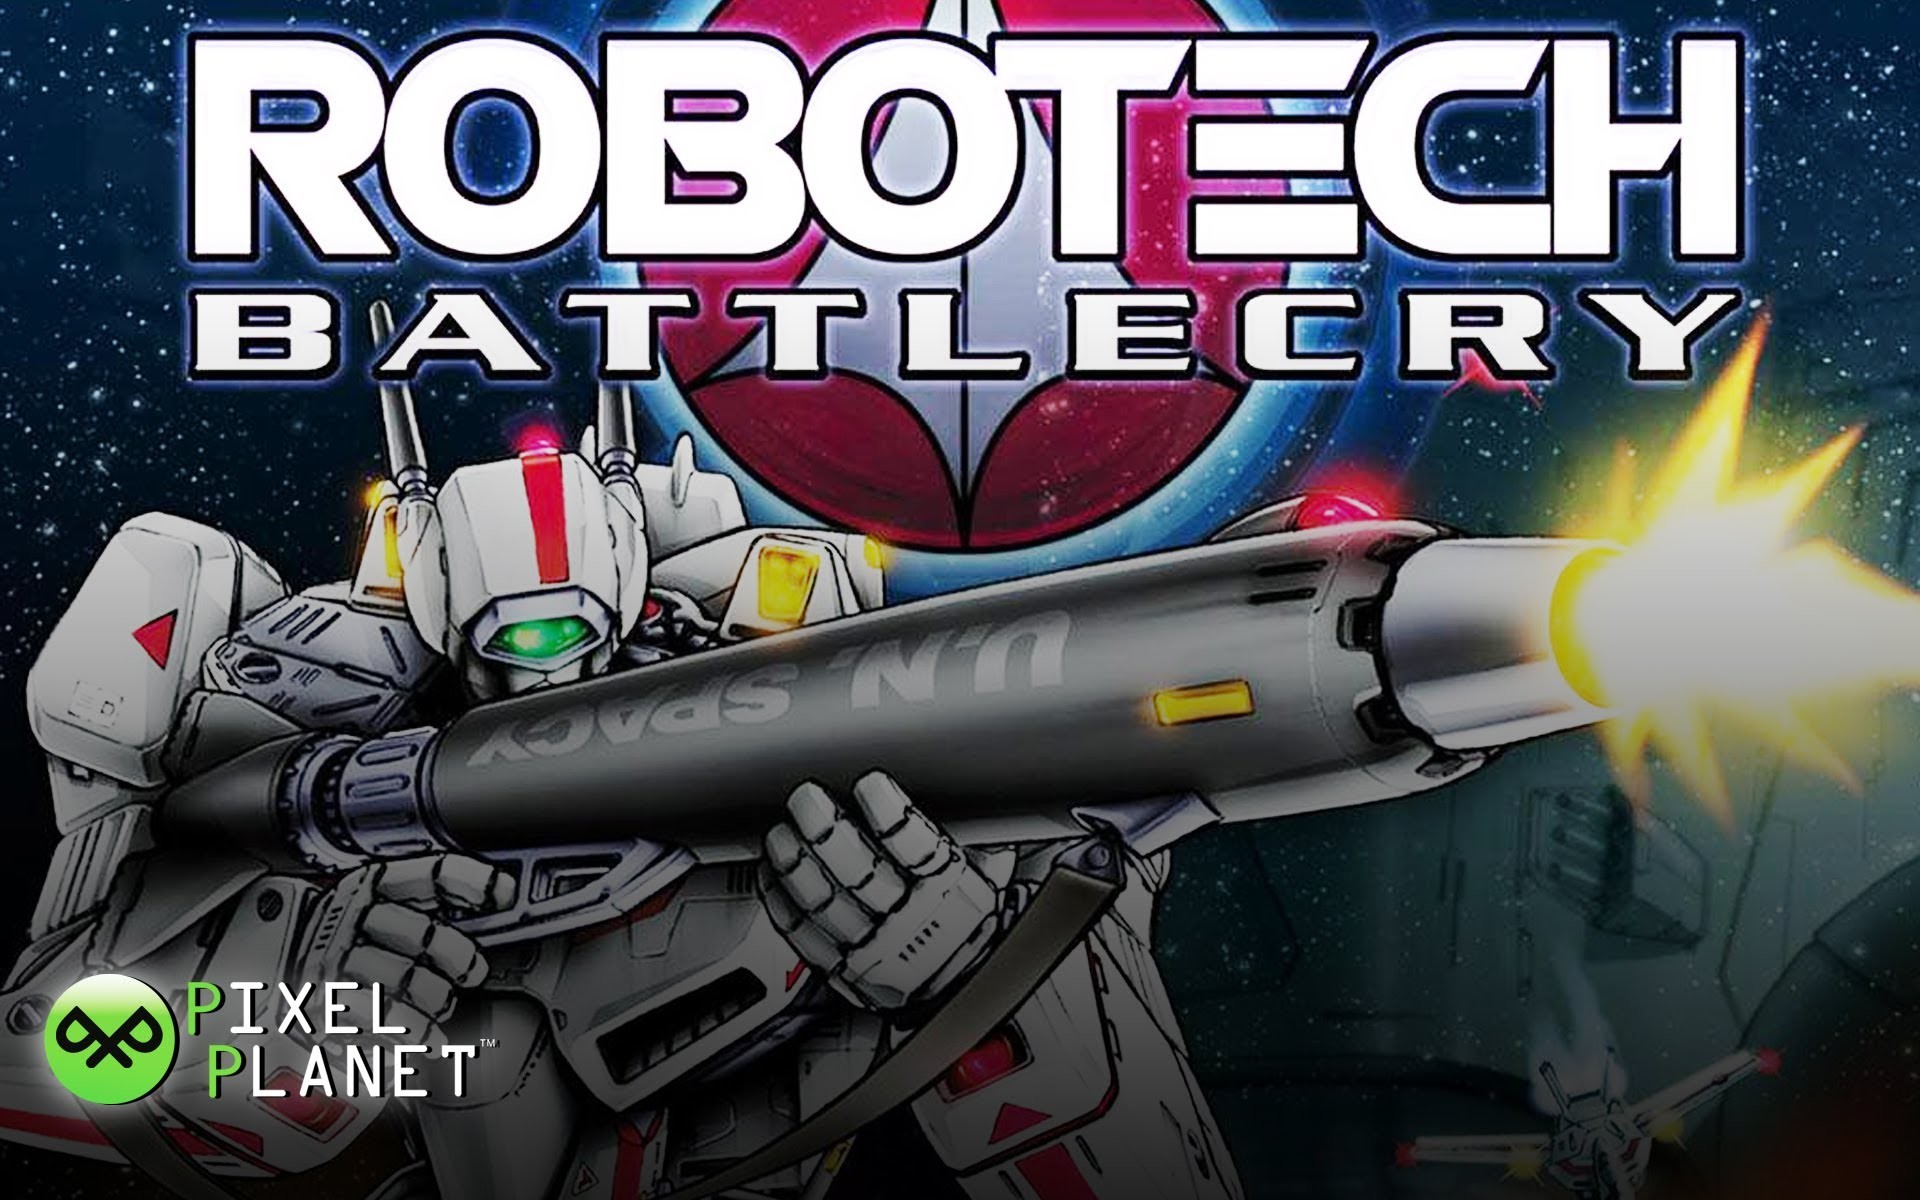 Robotech Battlecry – intro HD (2007) Old Skool!